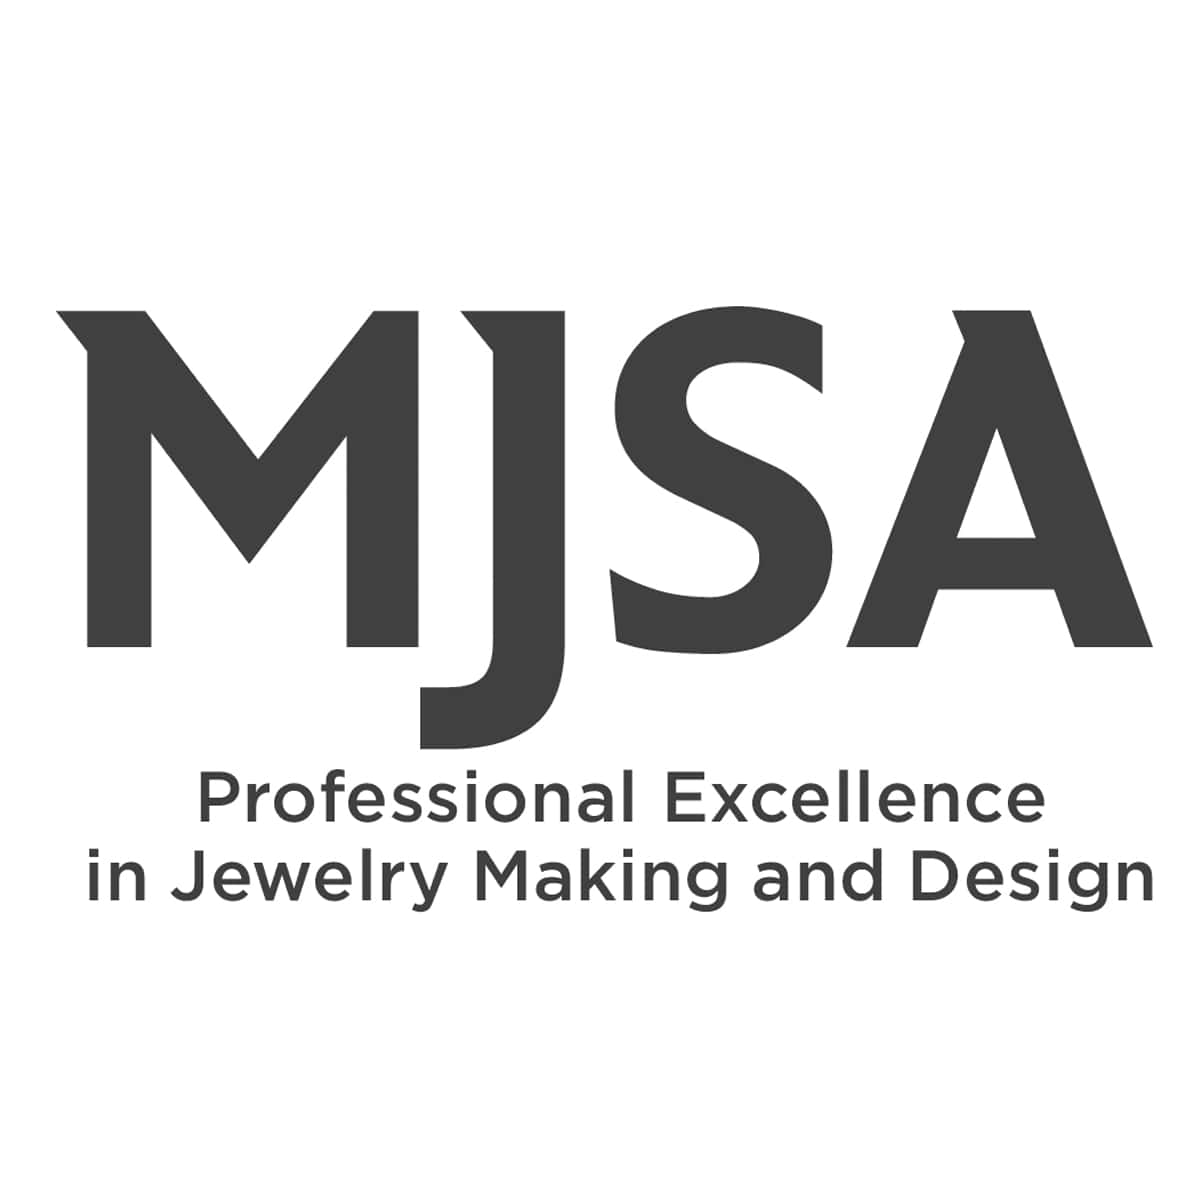 MJSA Journal 2017